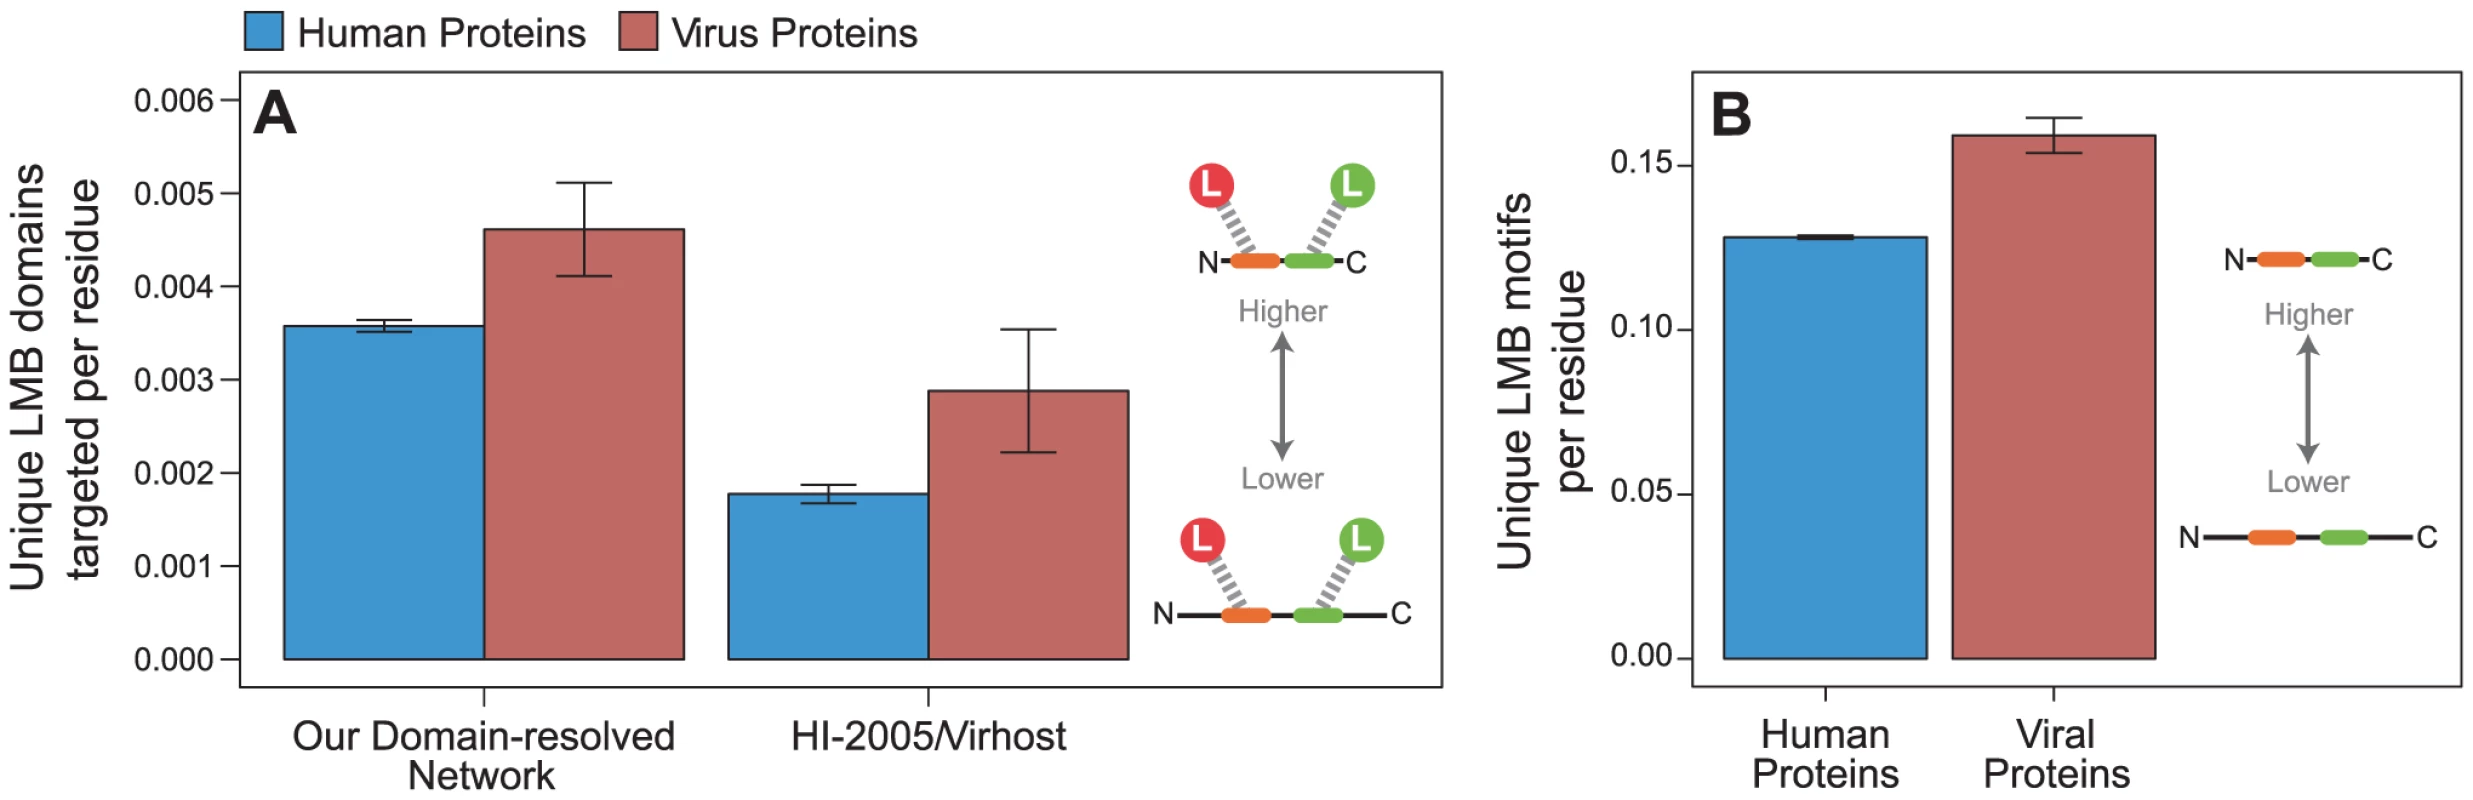 Viral proteins target LMB domains at greater density than human proteins.